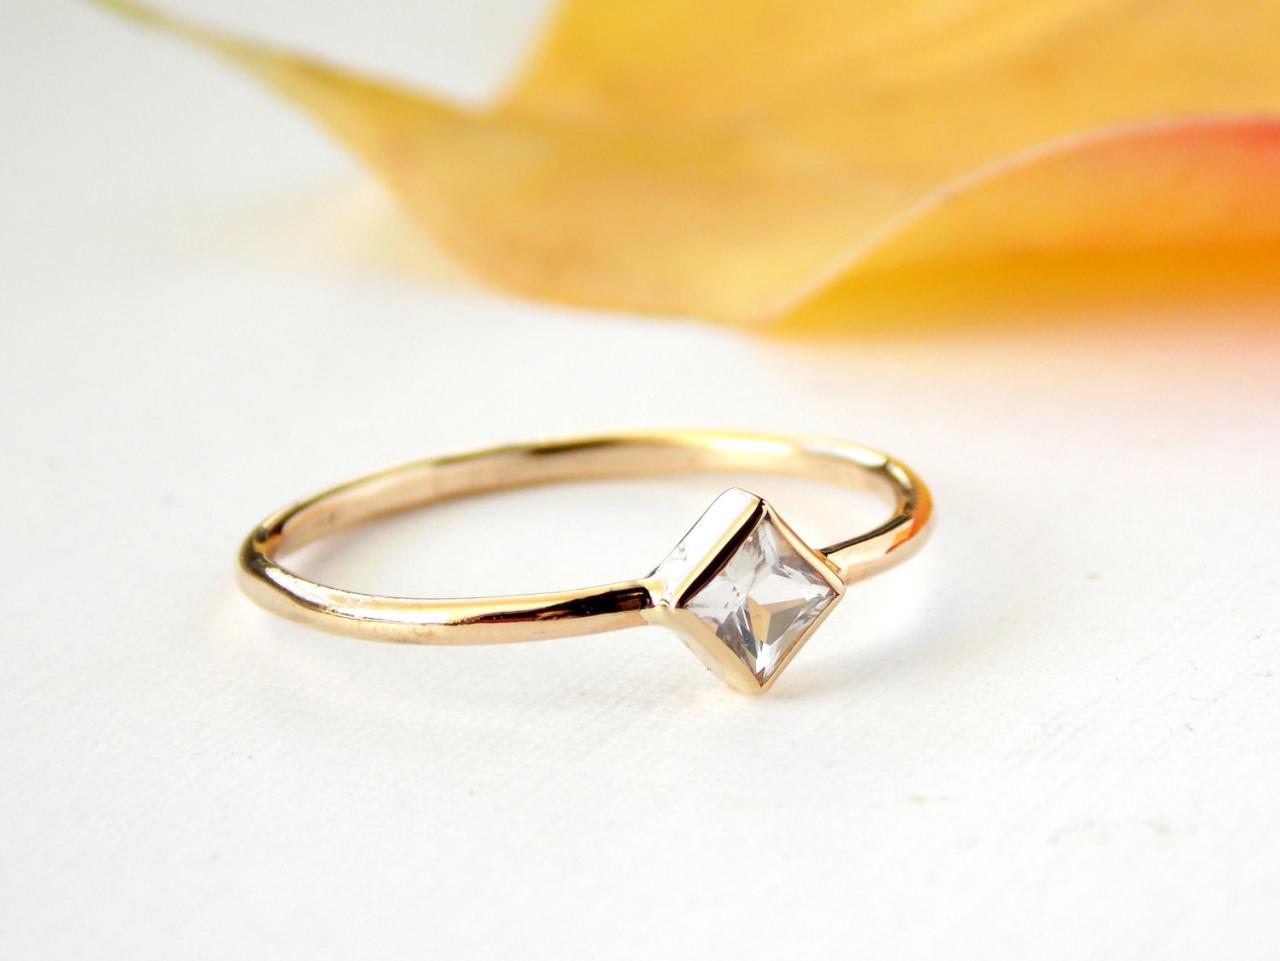 Princess Cut Engagement Ring: 14k Solid Gold Ring, White Topaz Ring, Simple Ring, Gold Ring, Wedding Ring, Engagement Ring